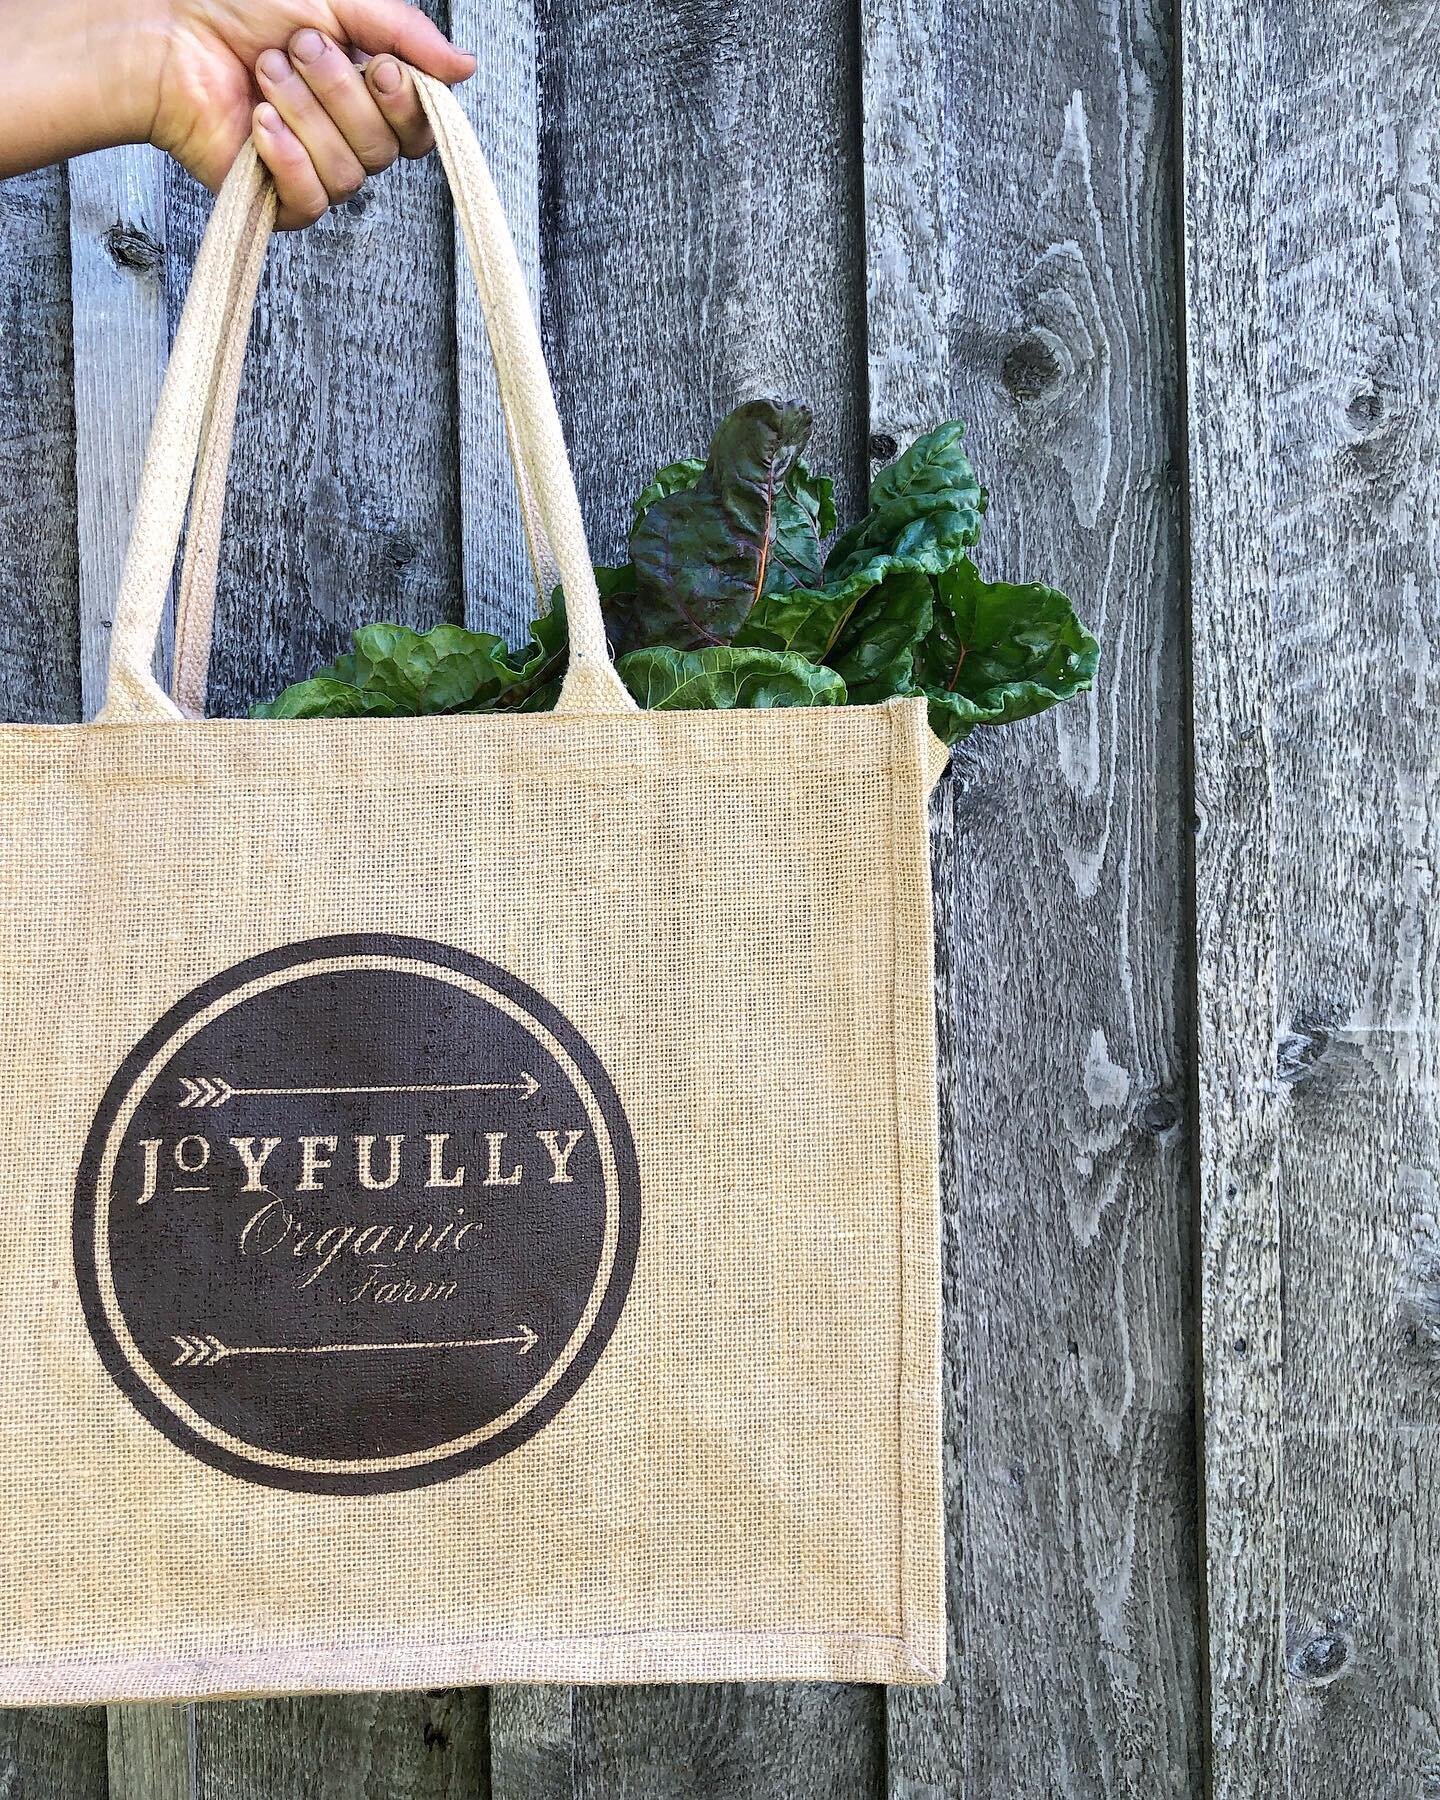 Contact Us — Joyfully Organic Farm